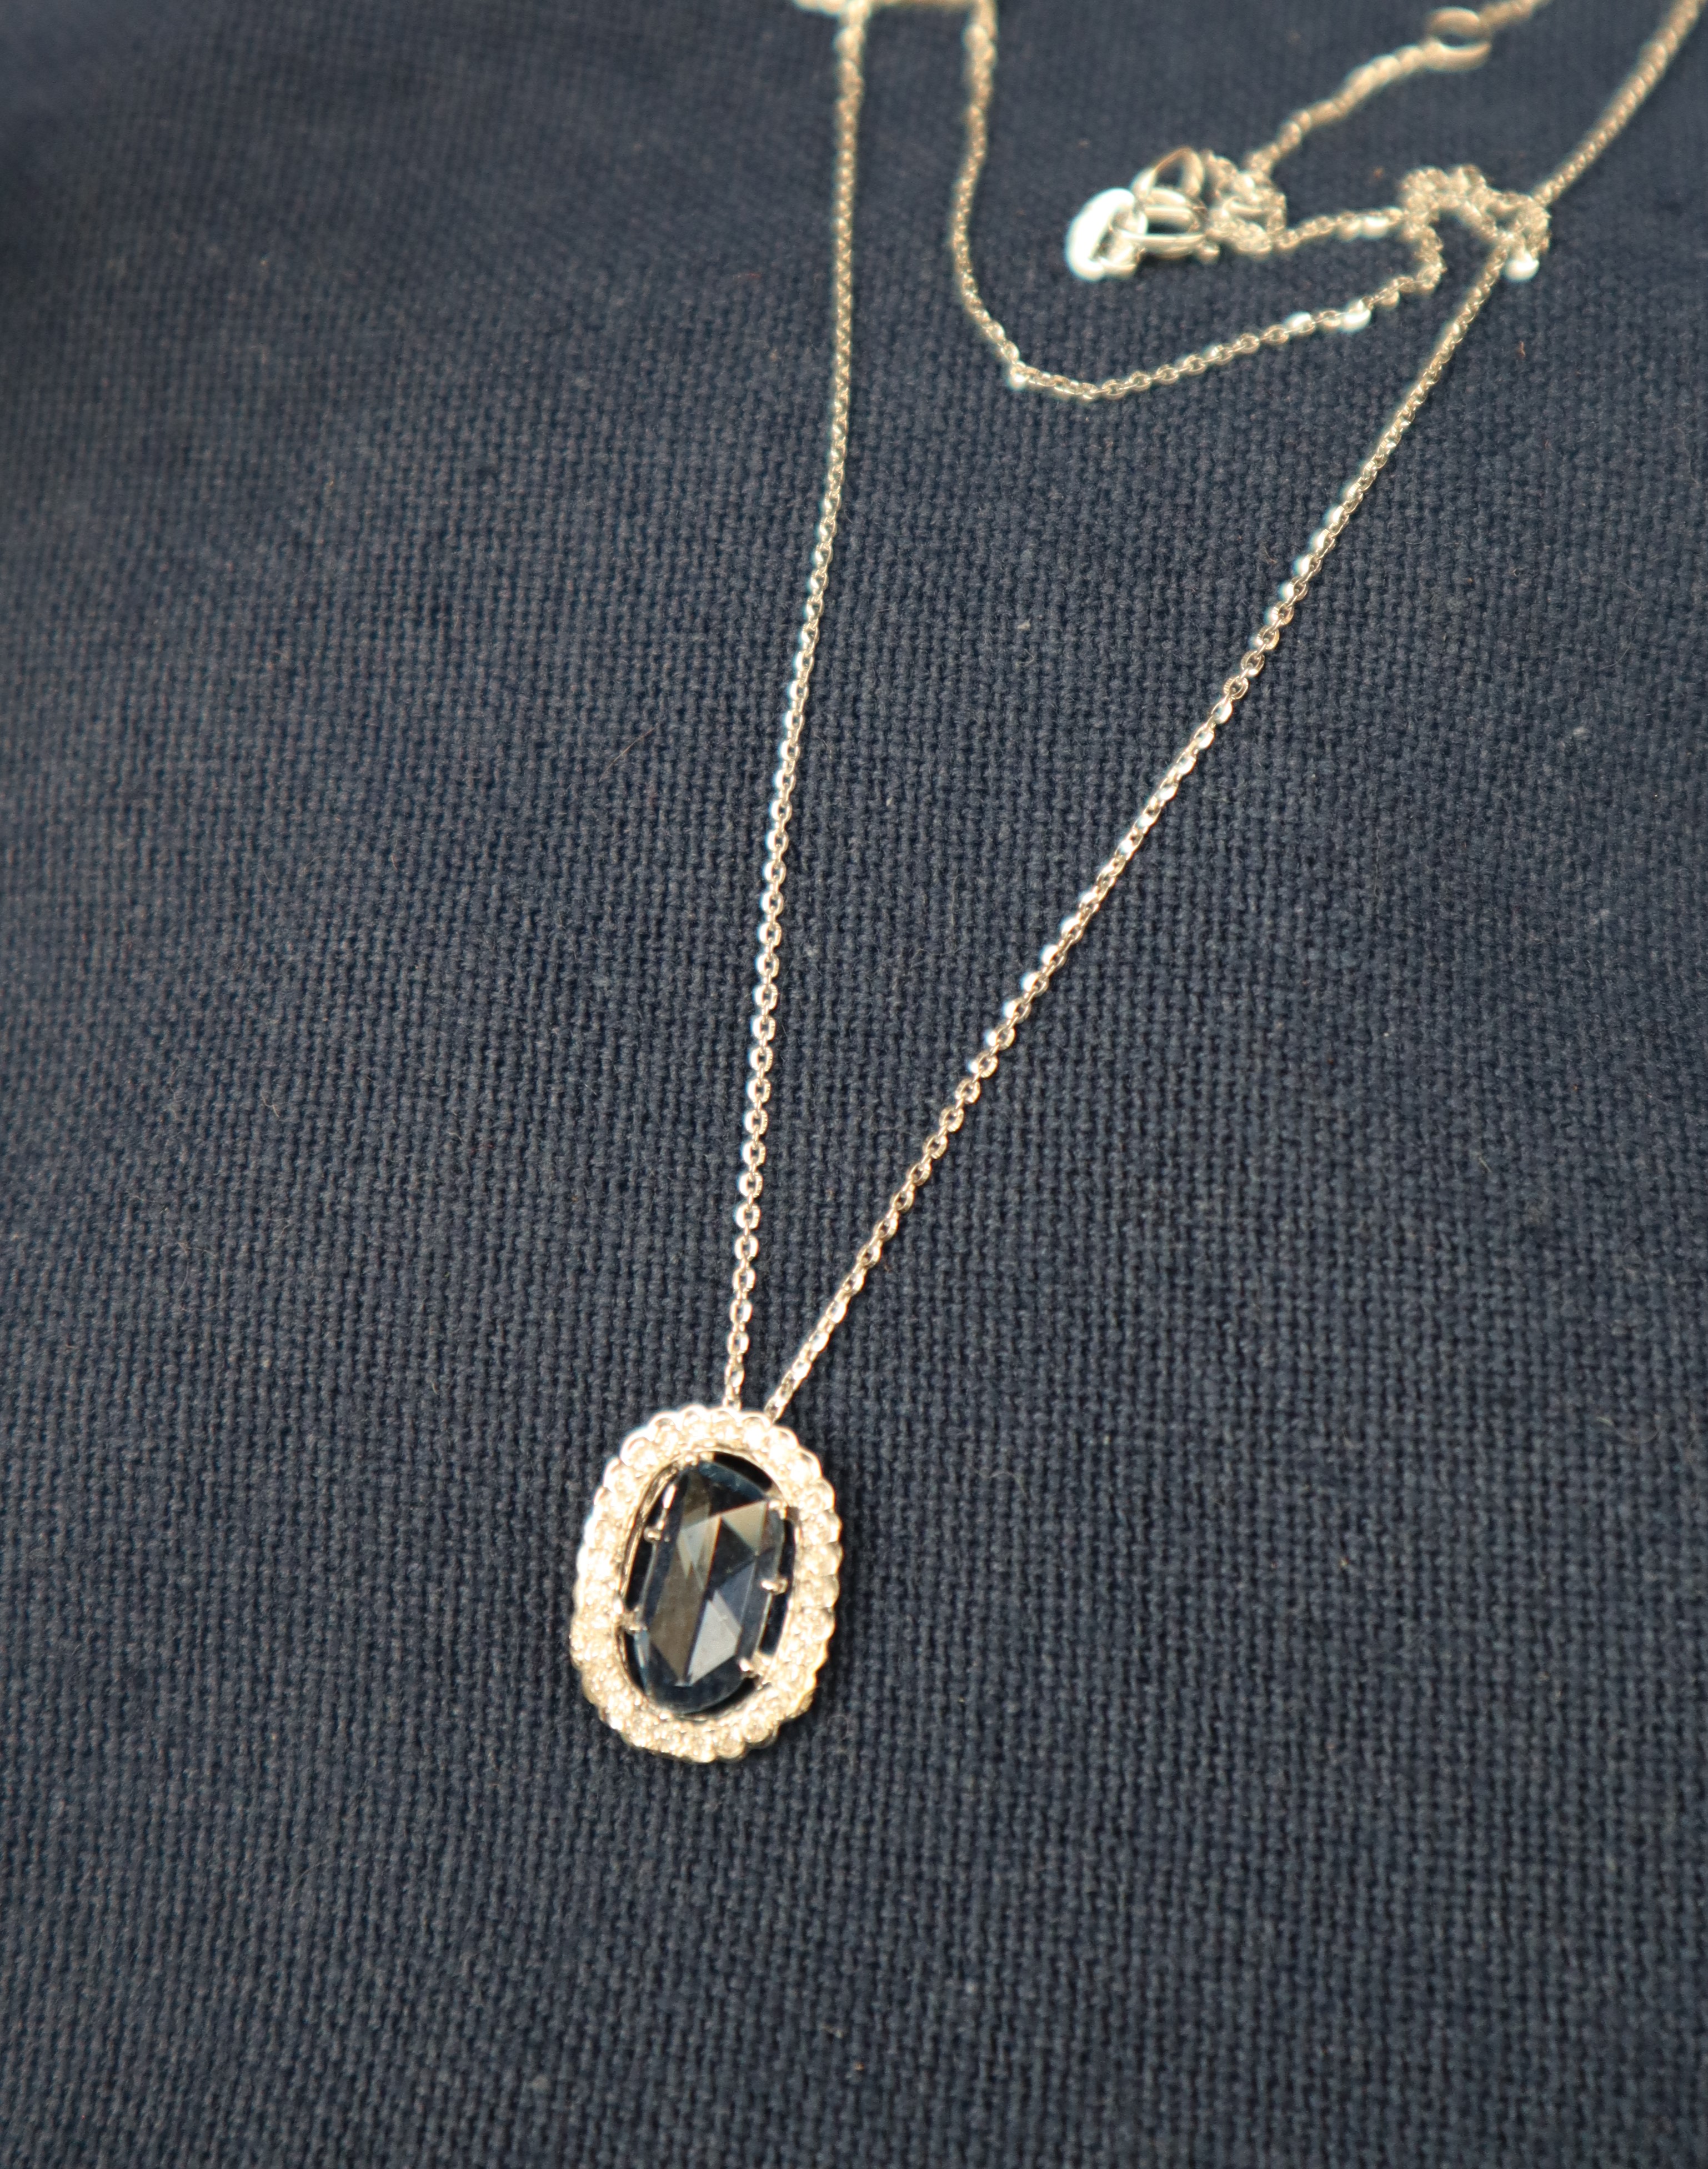 An aquamarine and diamond pendant, - Image 5 of 6